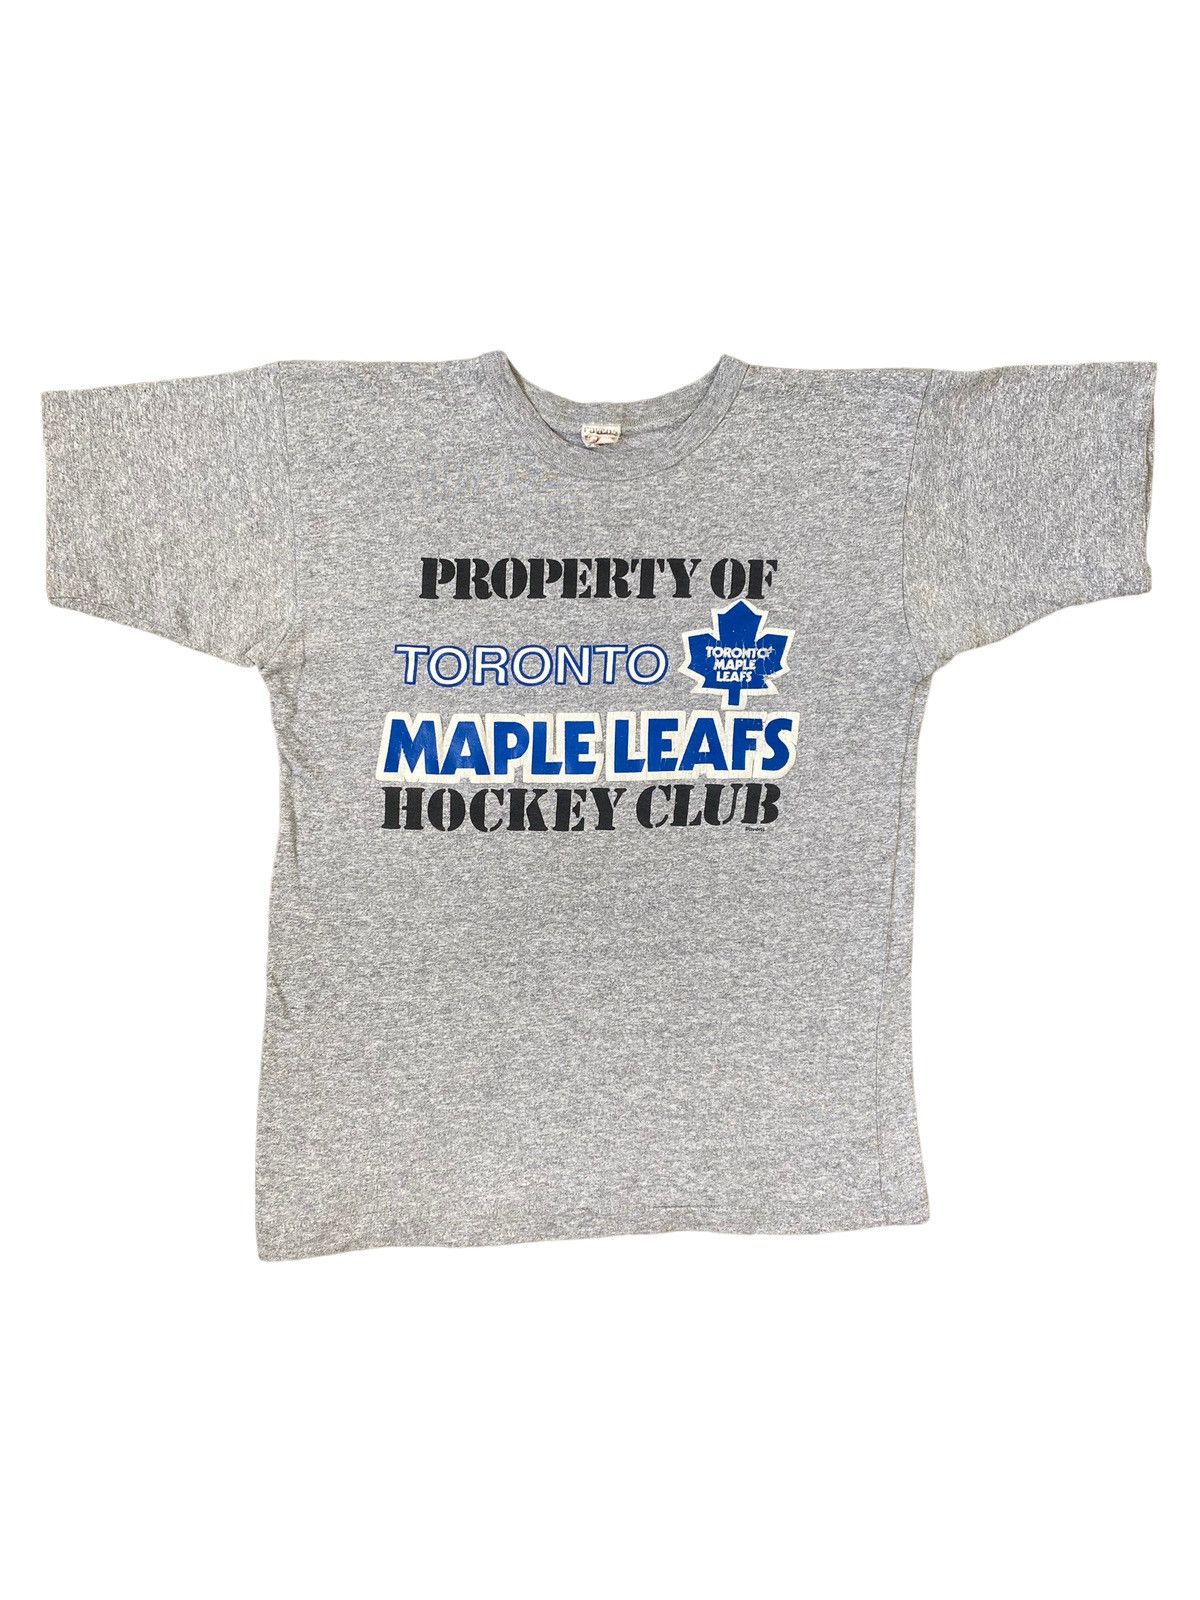 Vintage & Rad 90's Toronto Maple Leafs Single Stitch T-Shirt Large